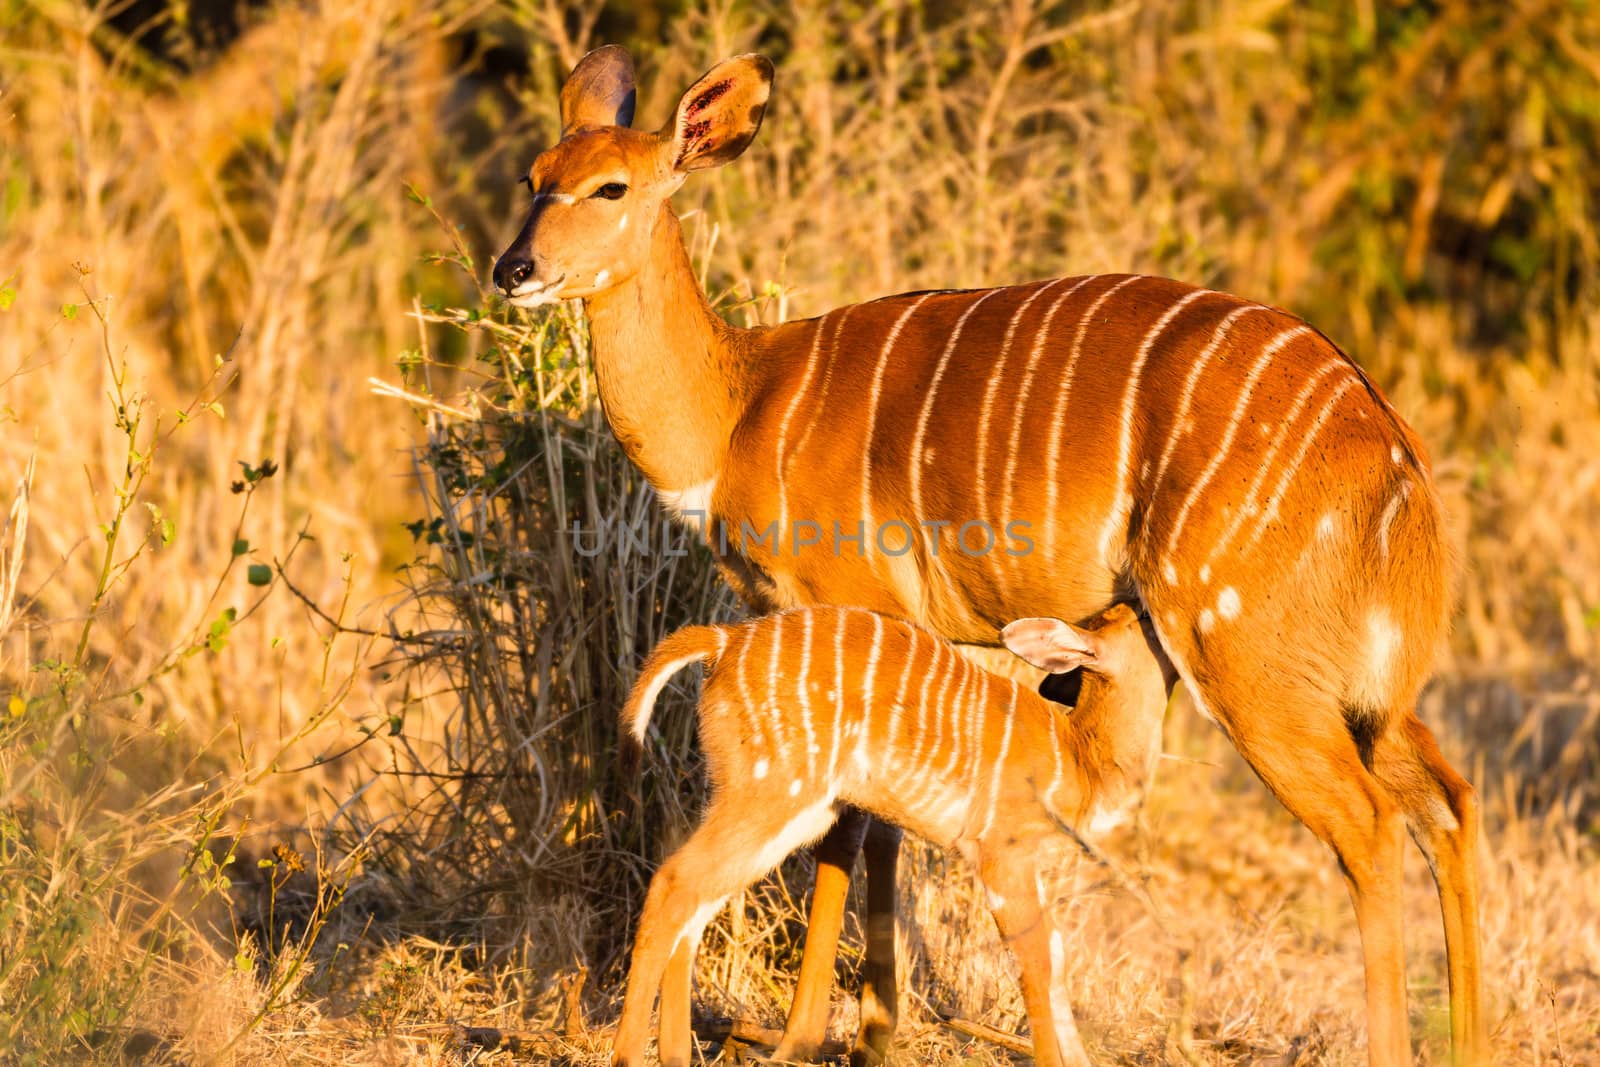 Wildlife animal nyala buck and its calf breast feeding alert for danger early morning sunlight.